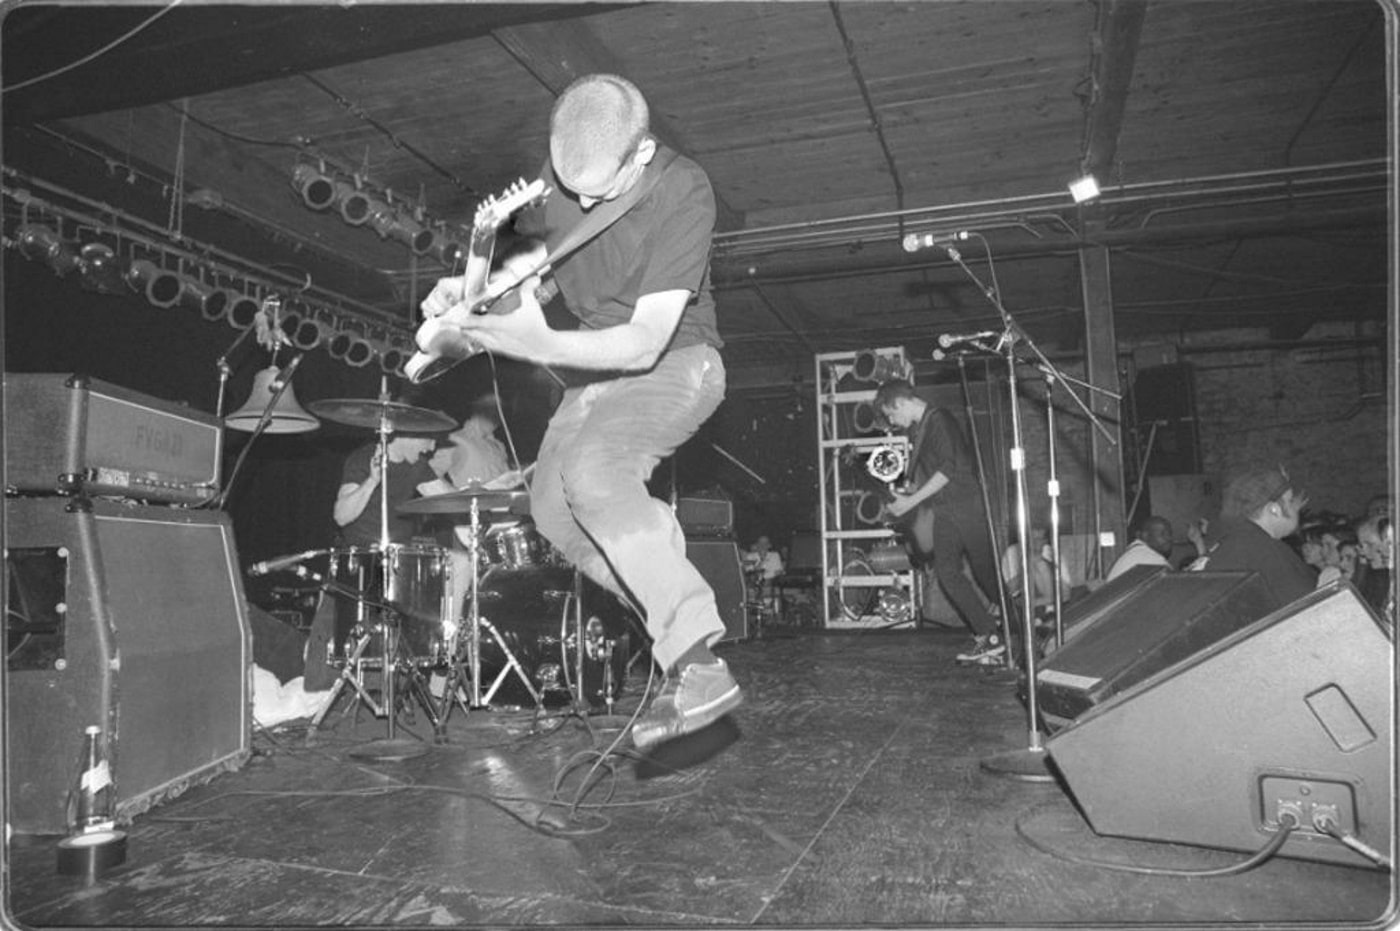 Fugazi live at Masquerade, Atlanta, GA, 3.29.96 - photo by Molly Stevens